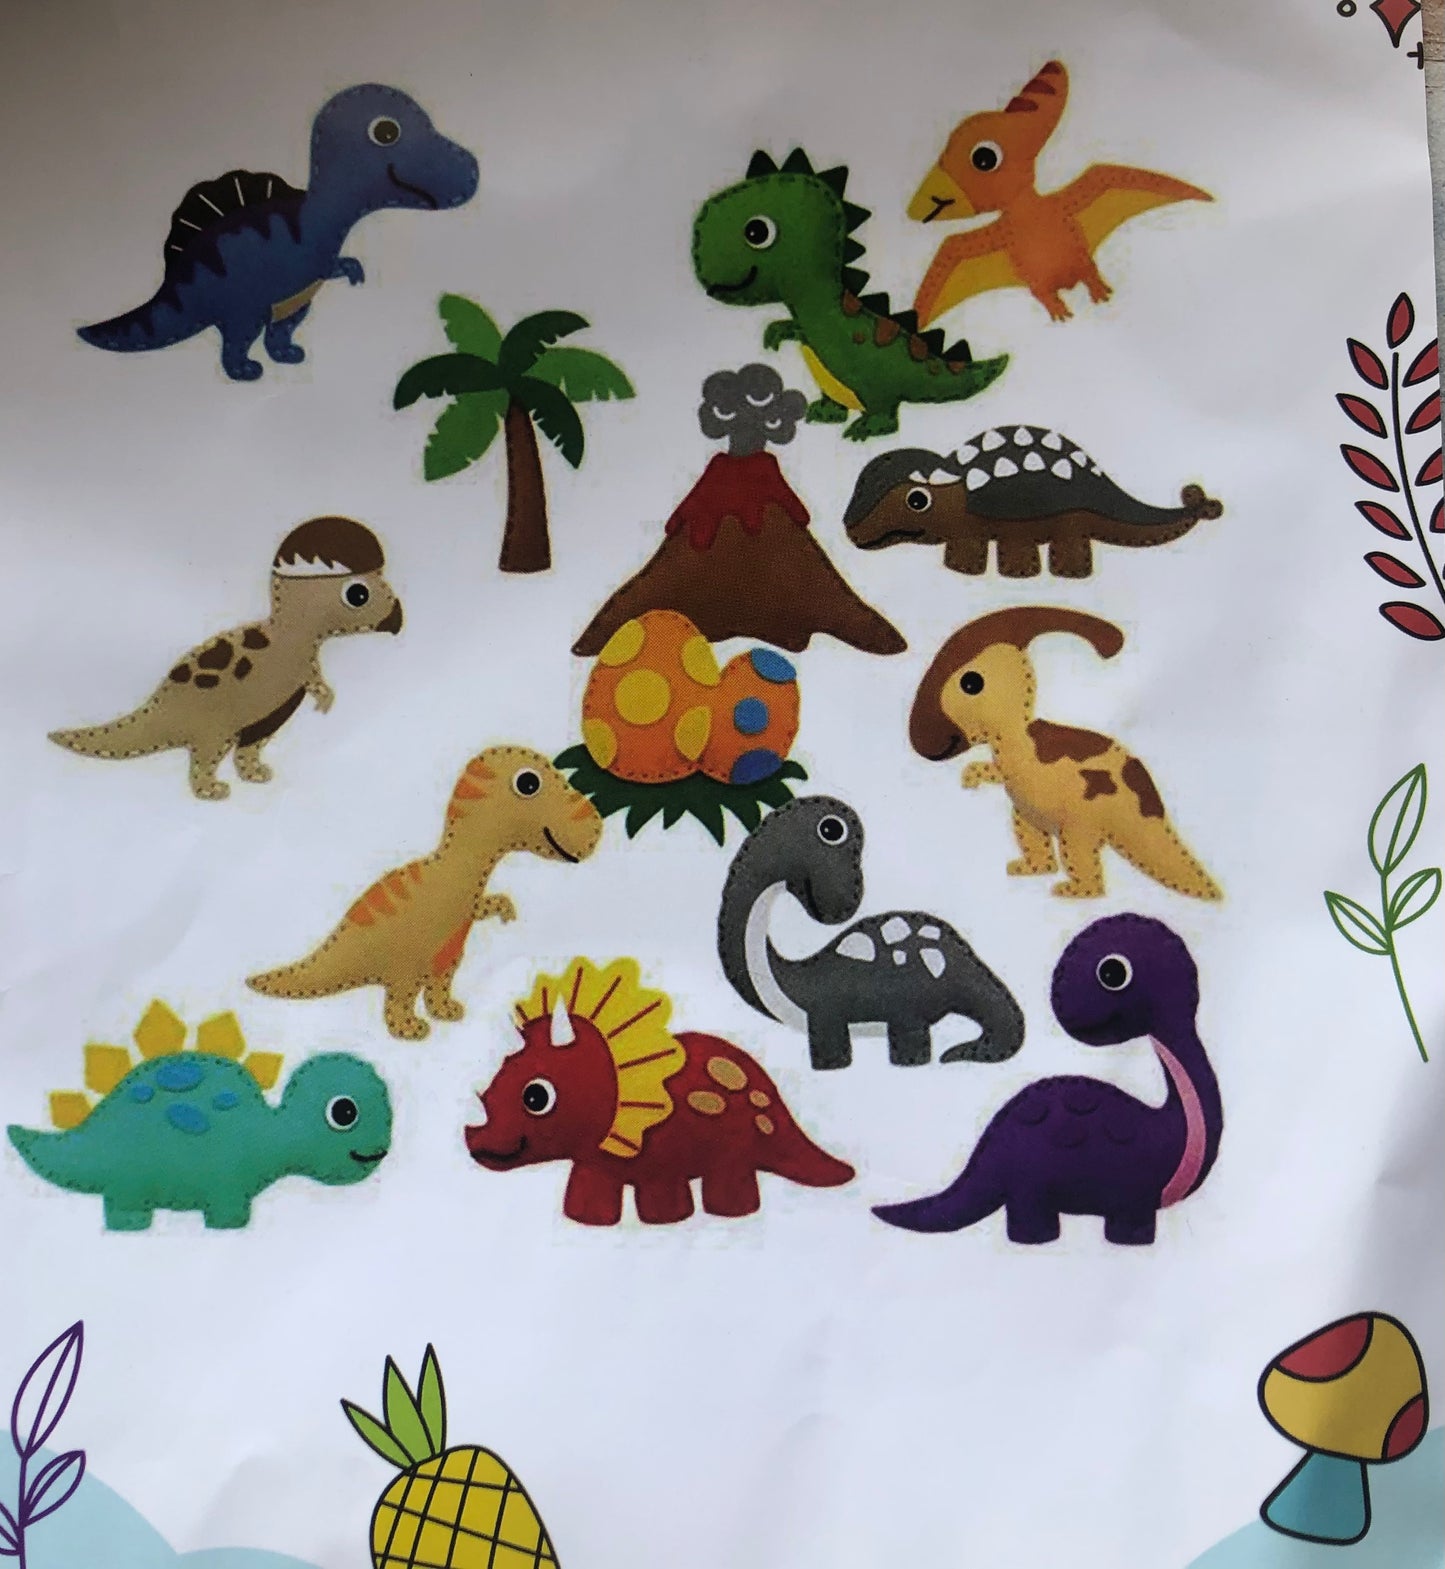 Dinosaur felt craft kit, craft activities for children, handmade birthday presents, baby shower party decoration, hand sewing kit, felt animal